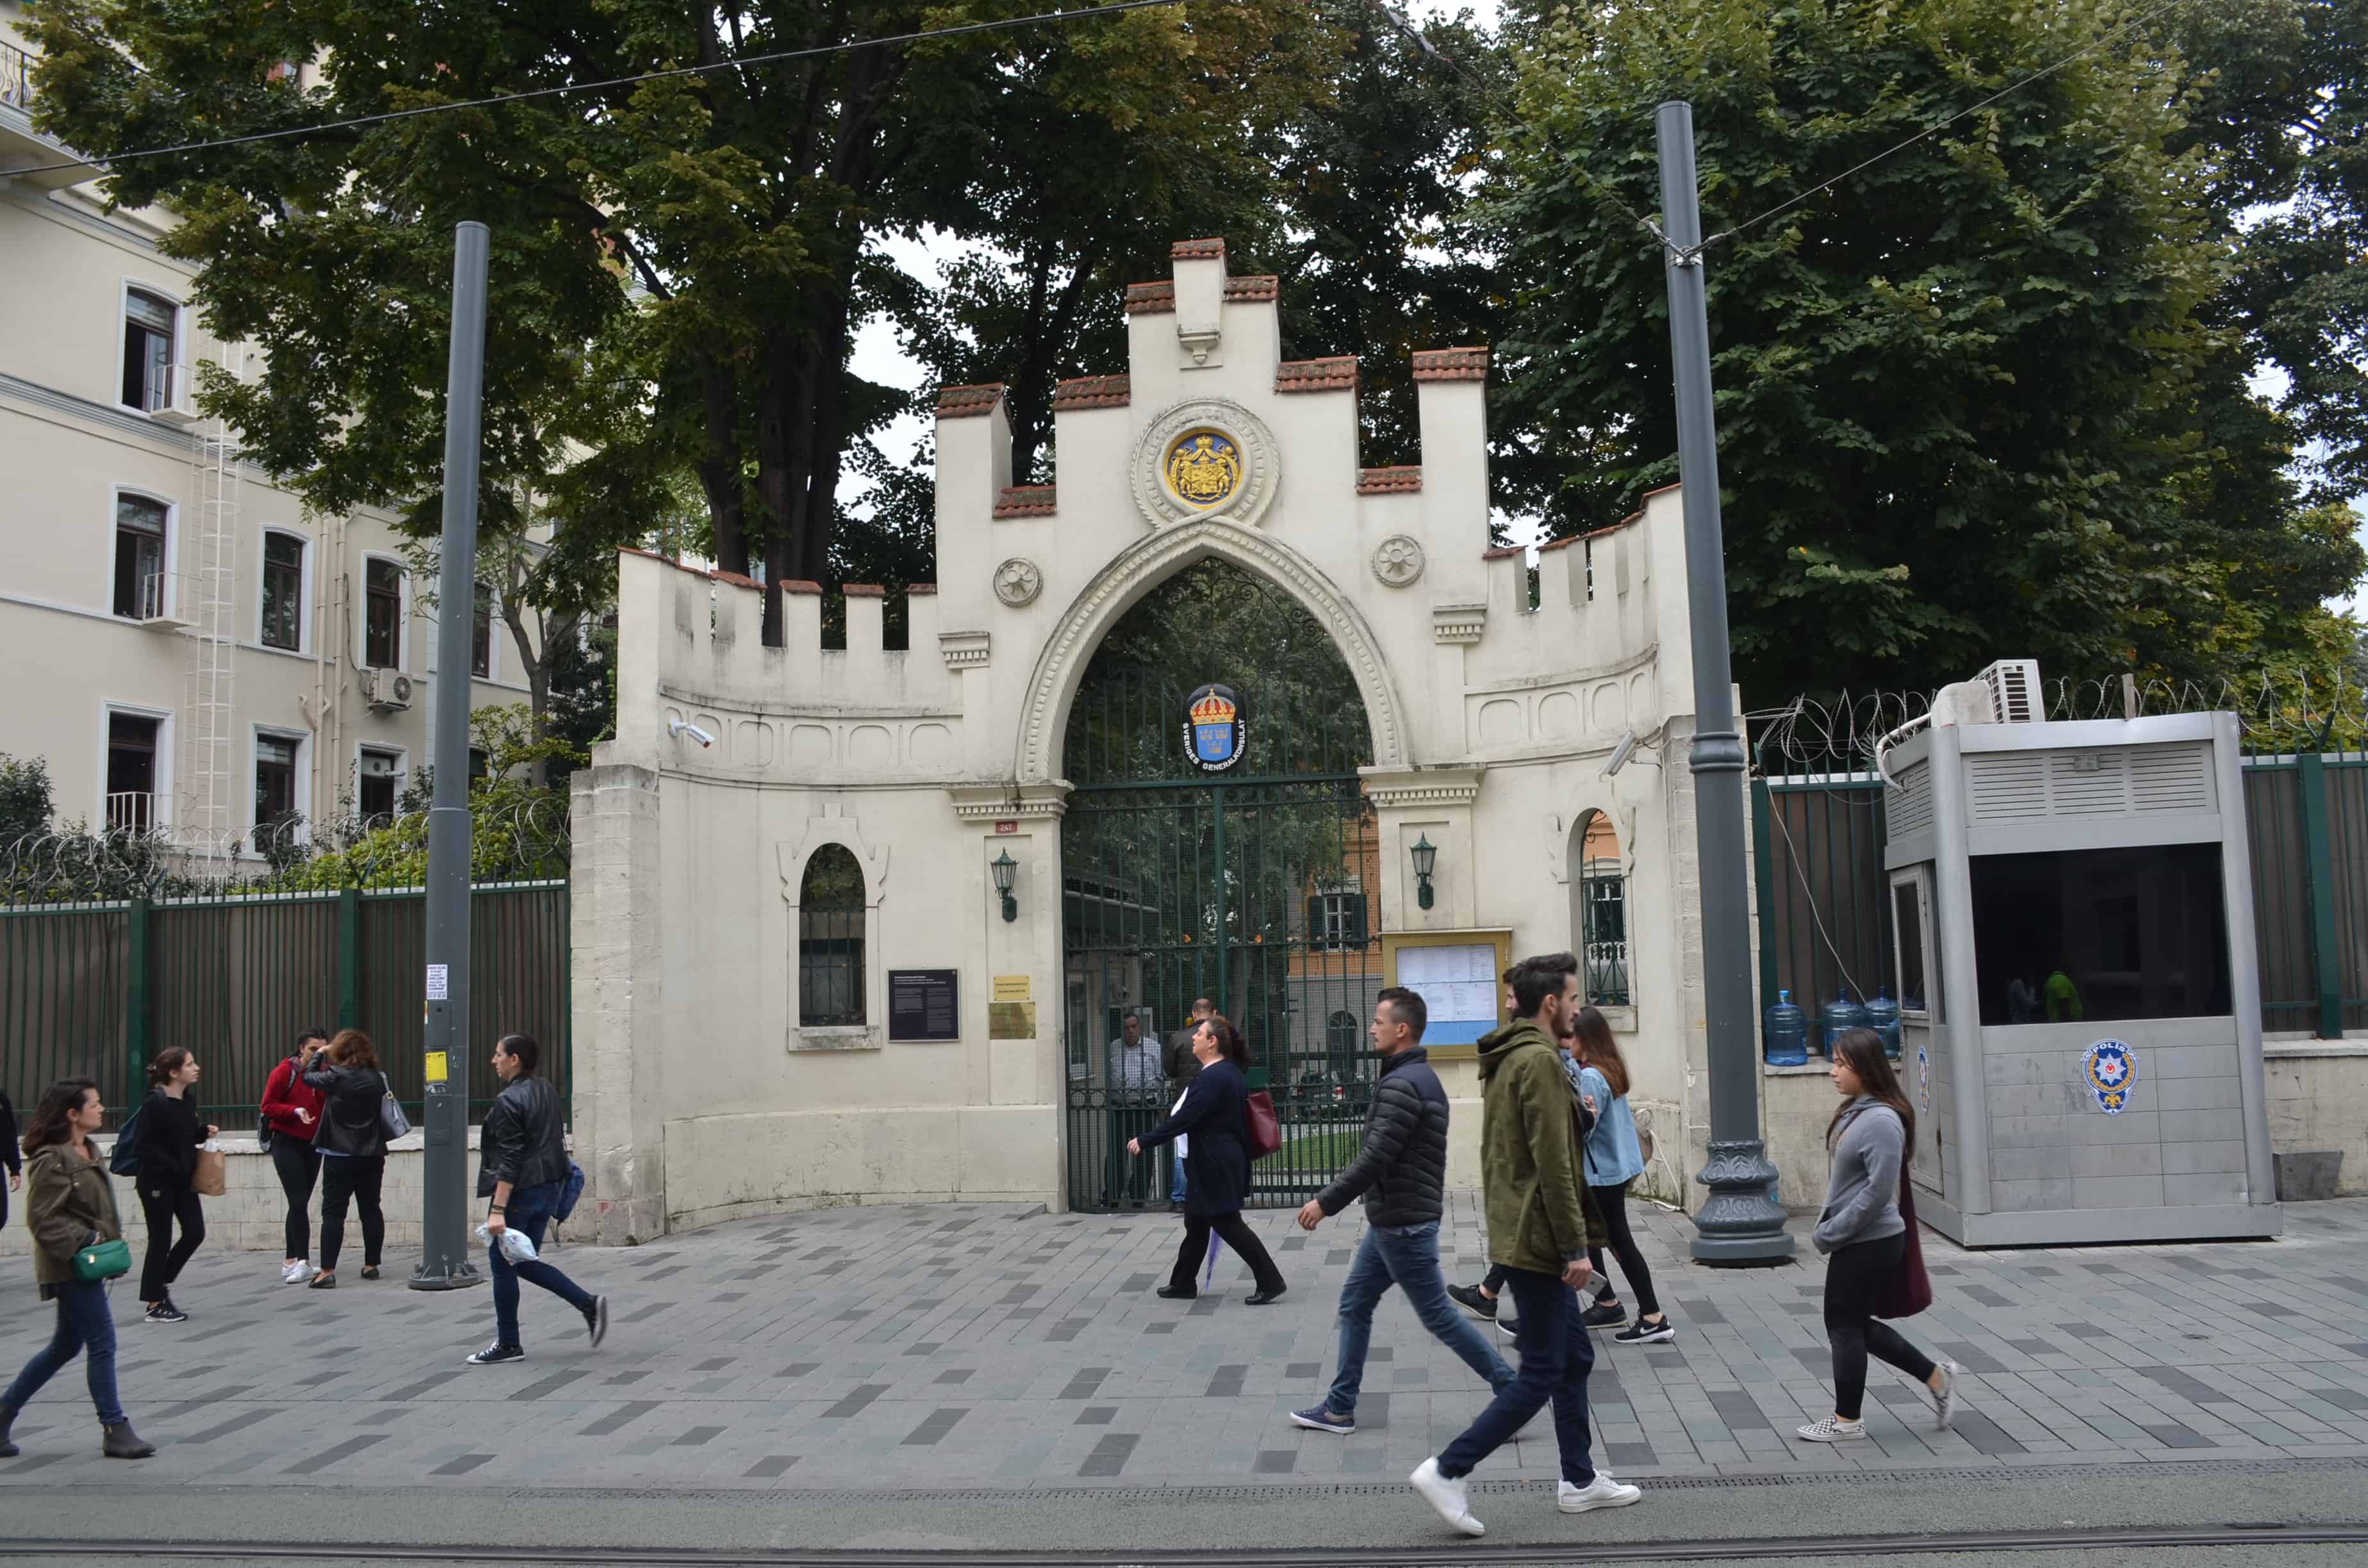 Gates to the Swedish Consulate